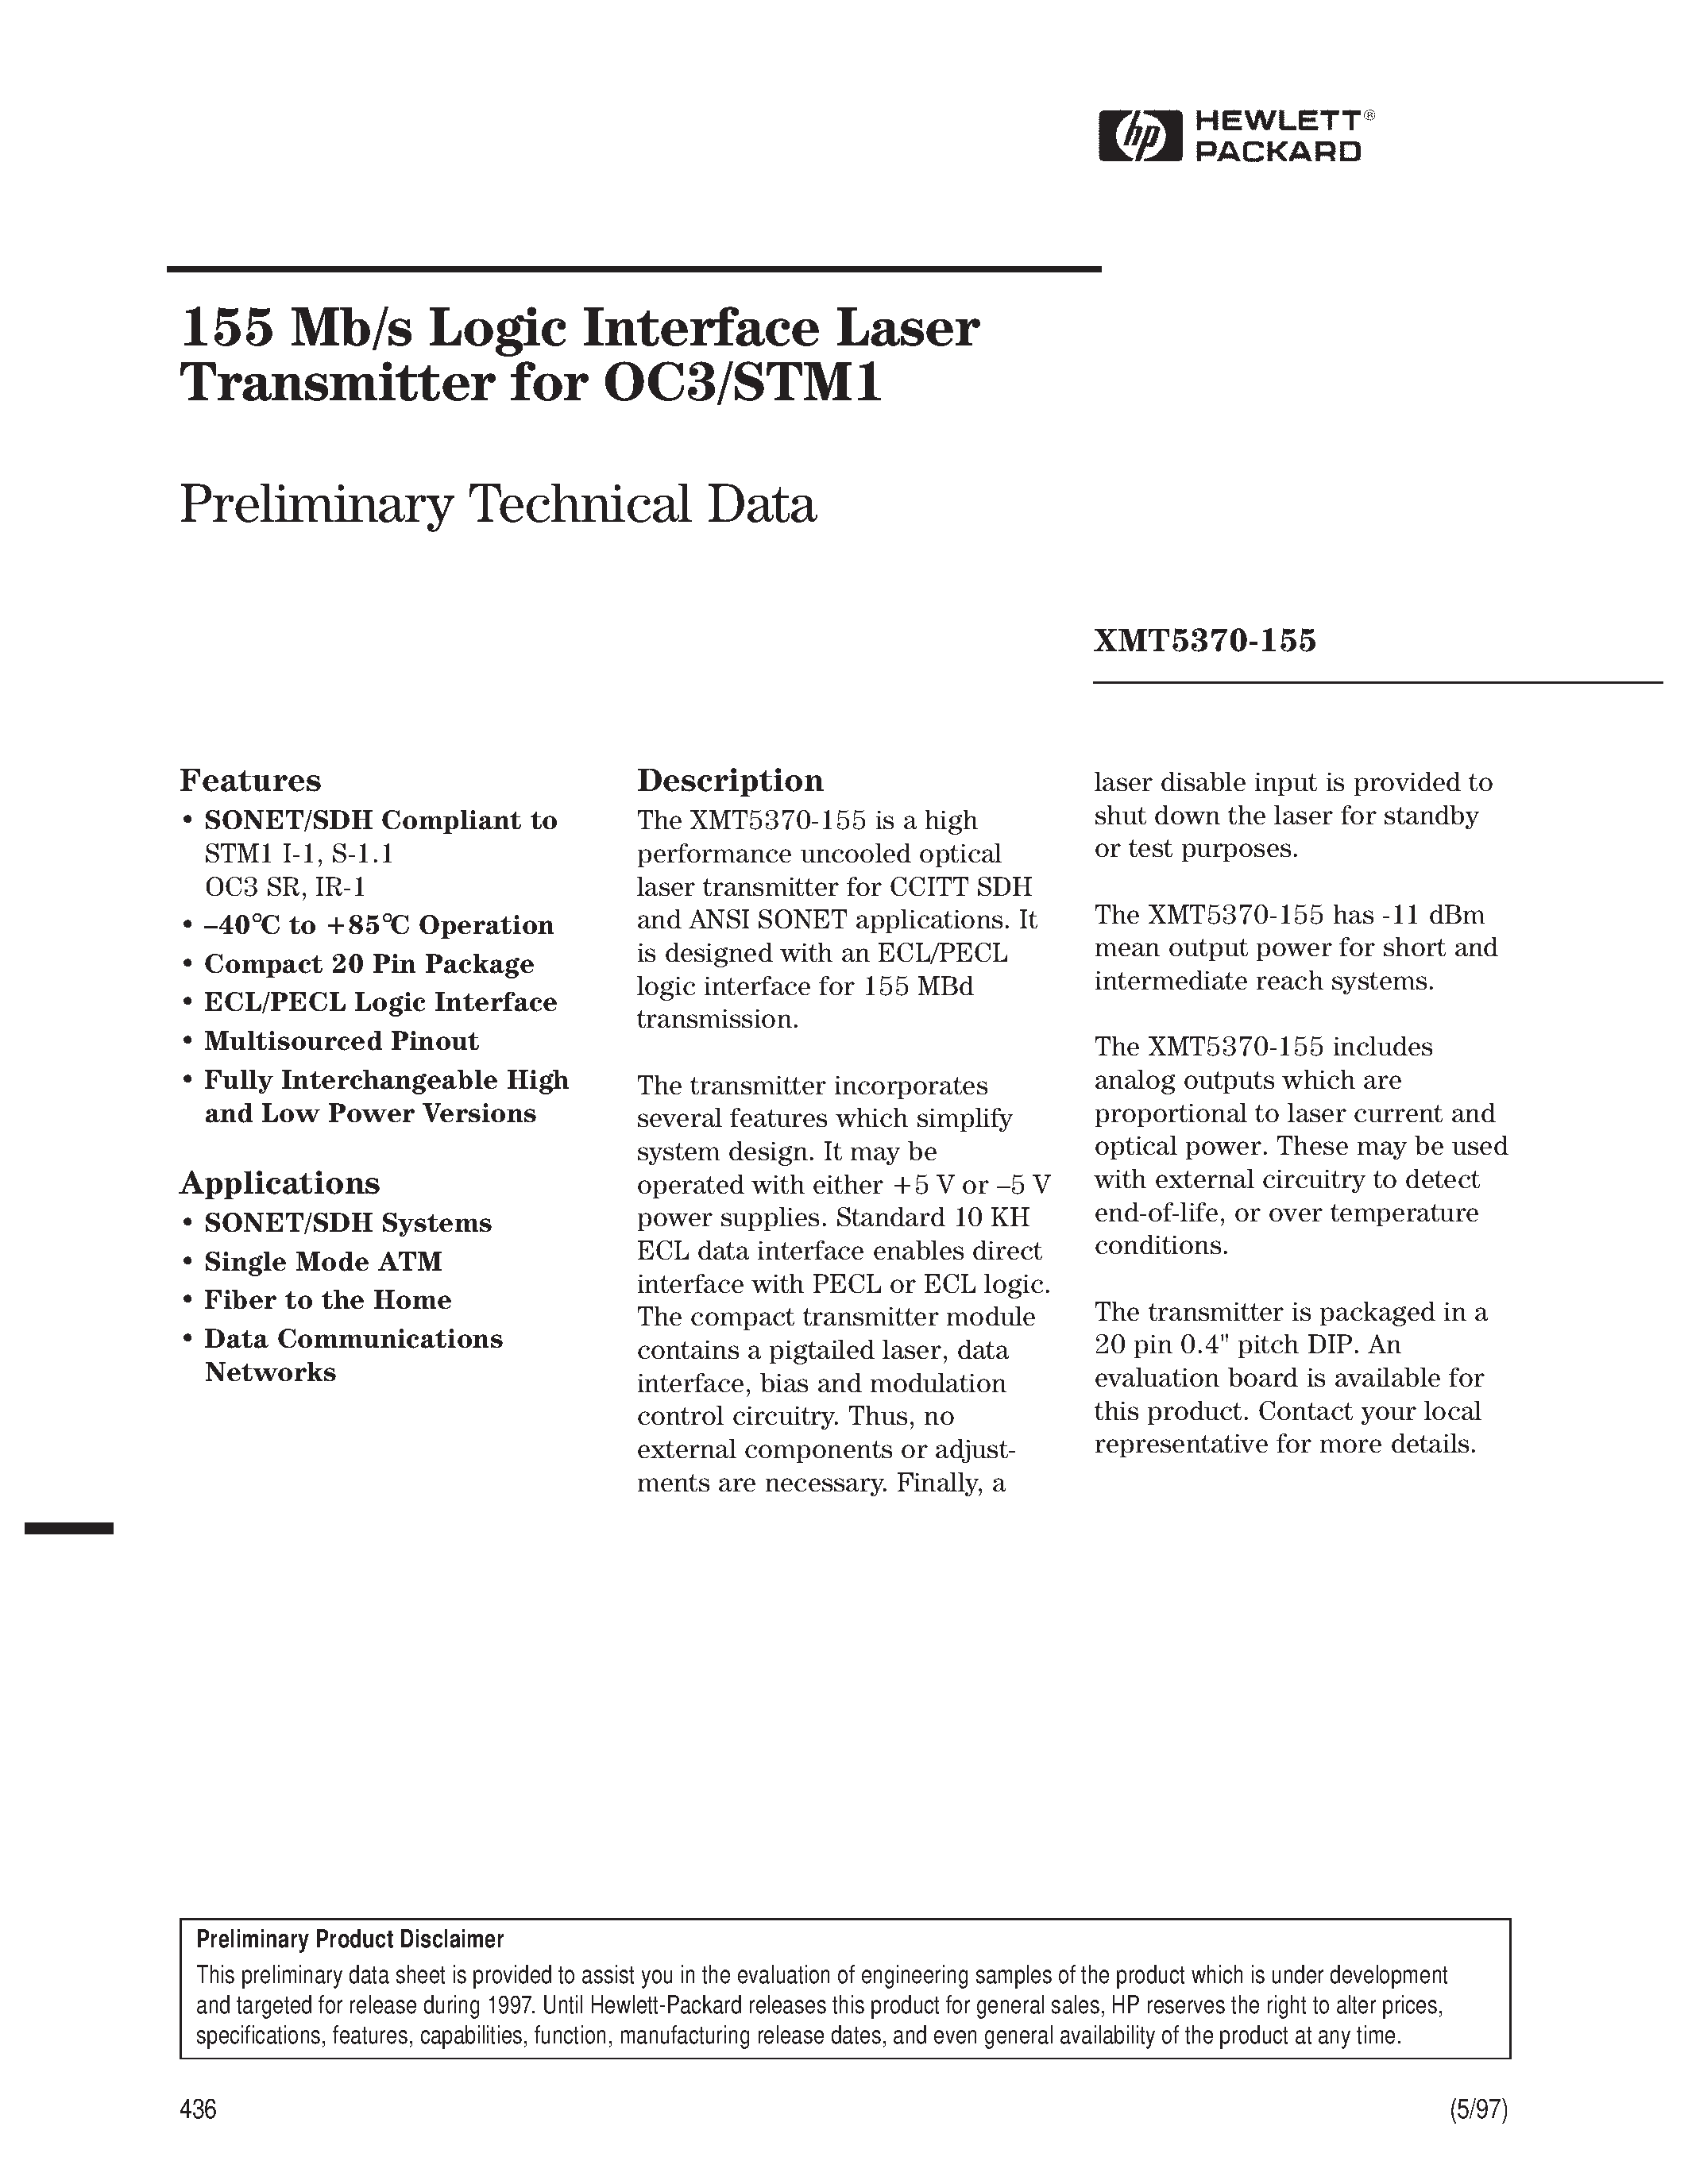 Datasheet XMT5370A-155-ST - 155 Mb/s Logic Interface Laser Transmitter for OC3/STM1 page 1